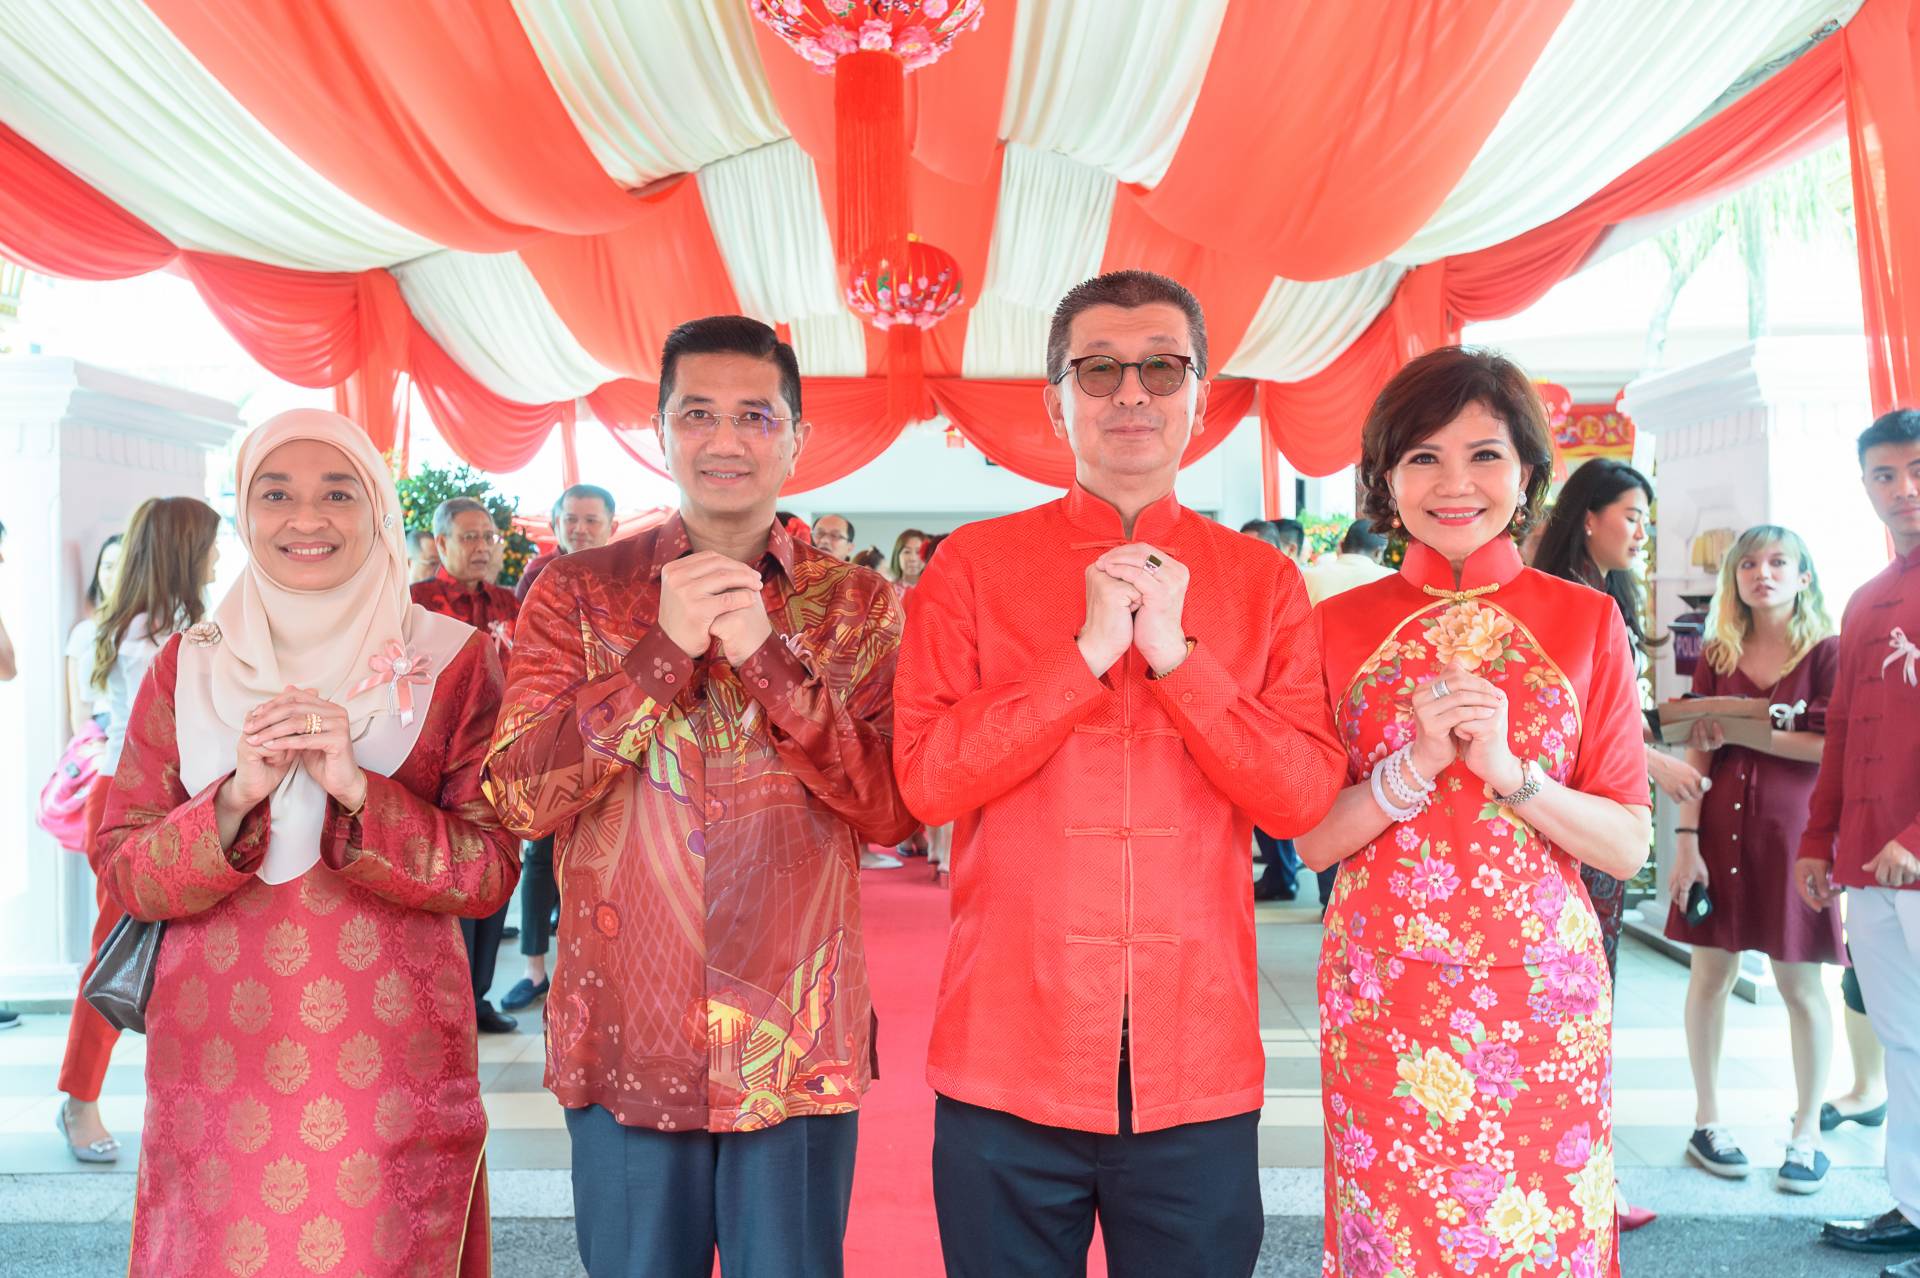 Photo with Datuk Seri Azmin Ali, Minister of Economy